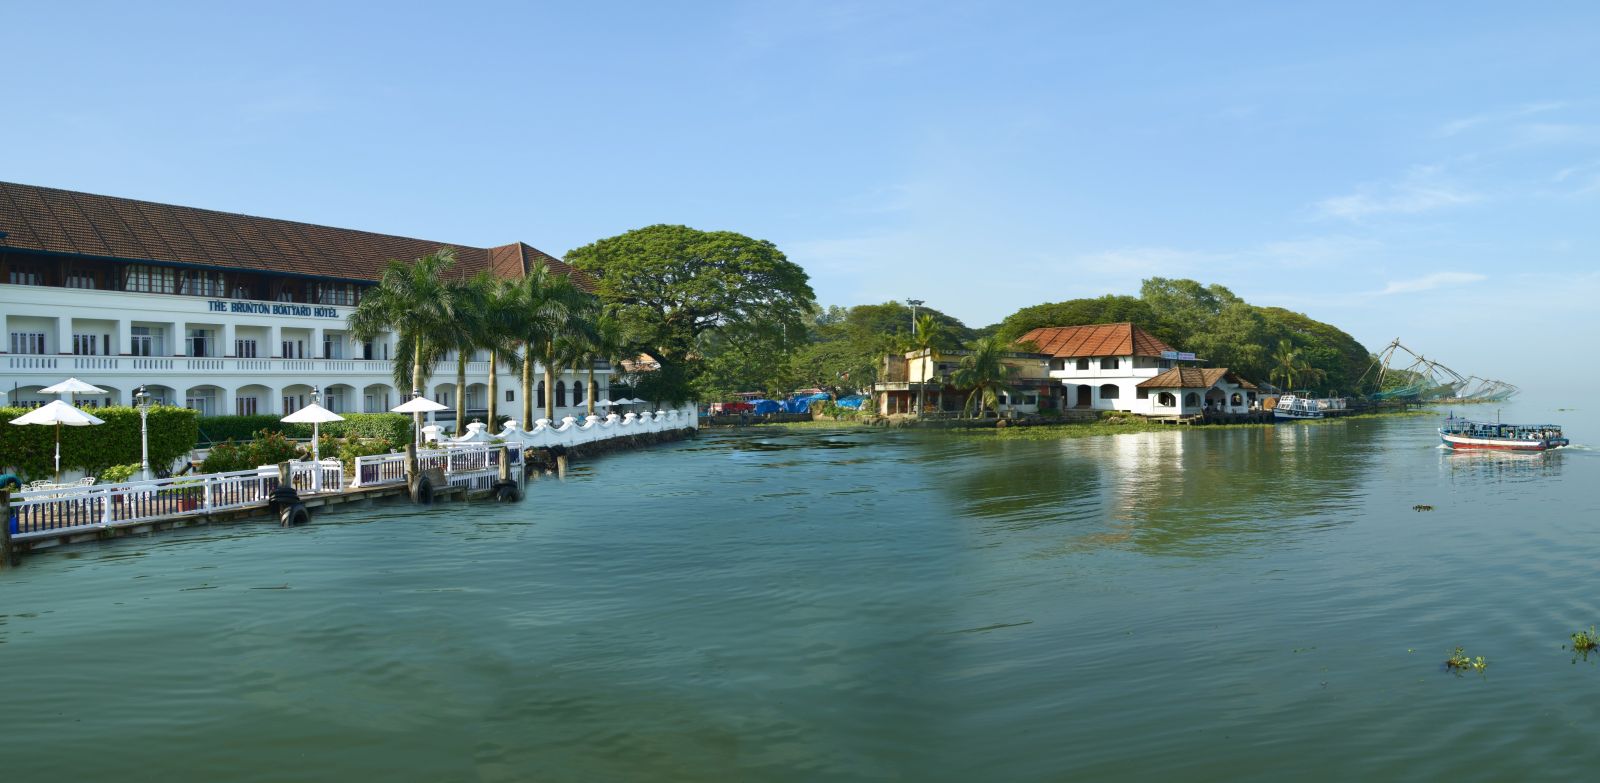 Backwaters setting of the Brunton Boatyard hotel in Cochin India